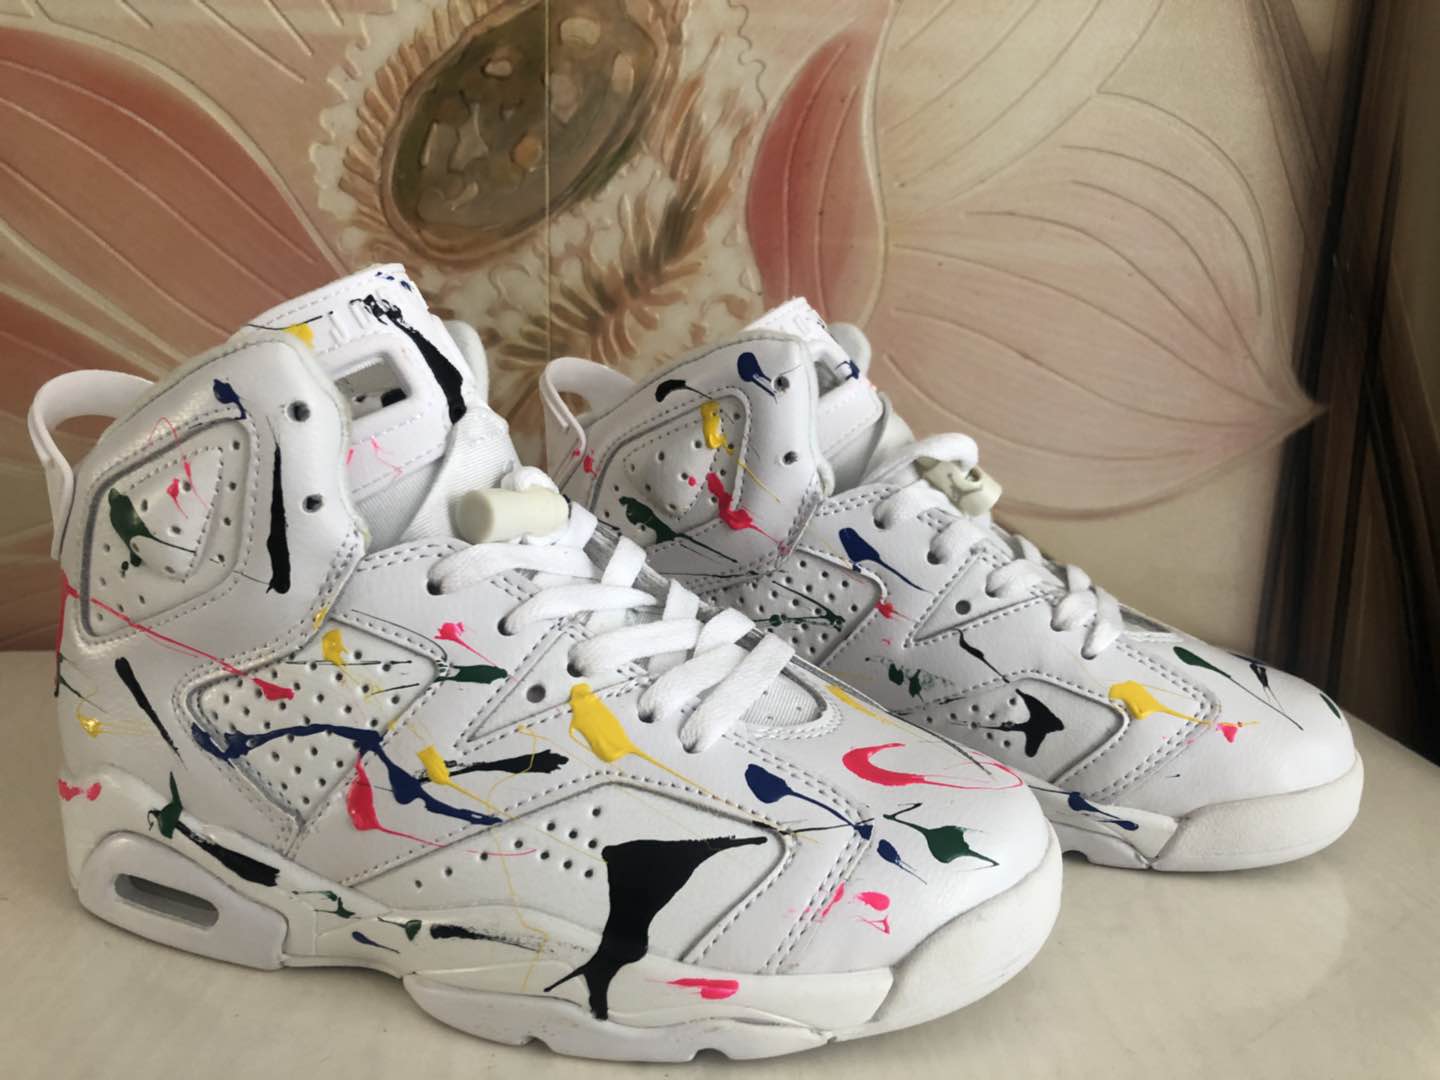 Air Jordan 6 White Graffiti Shoes - Click Image to Close